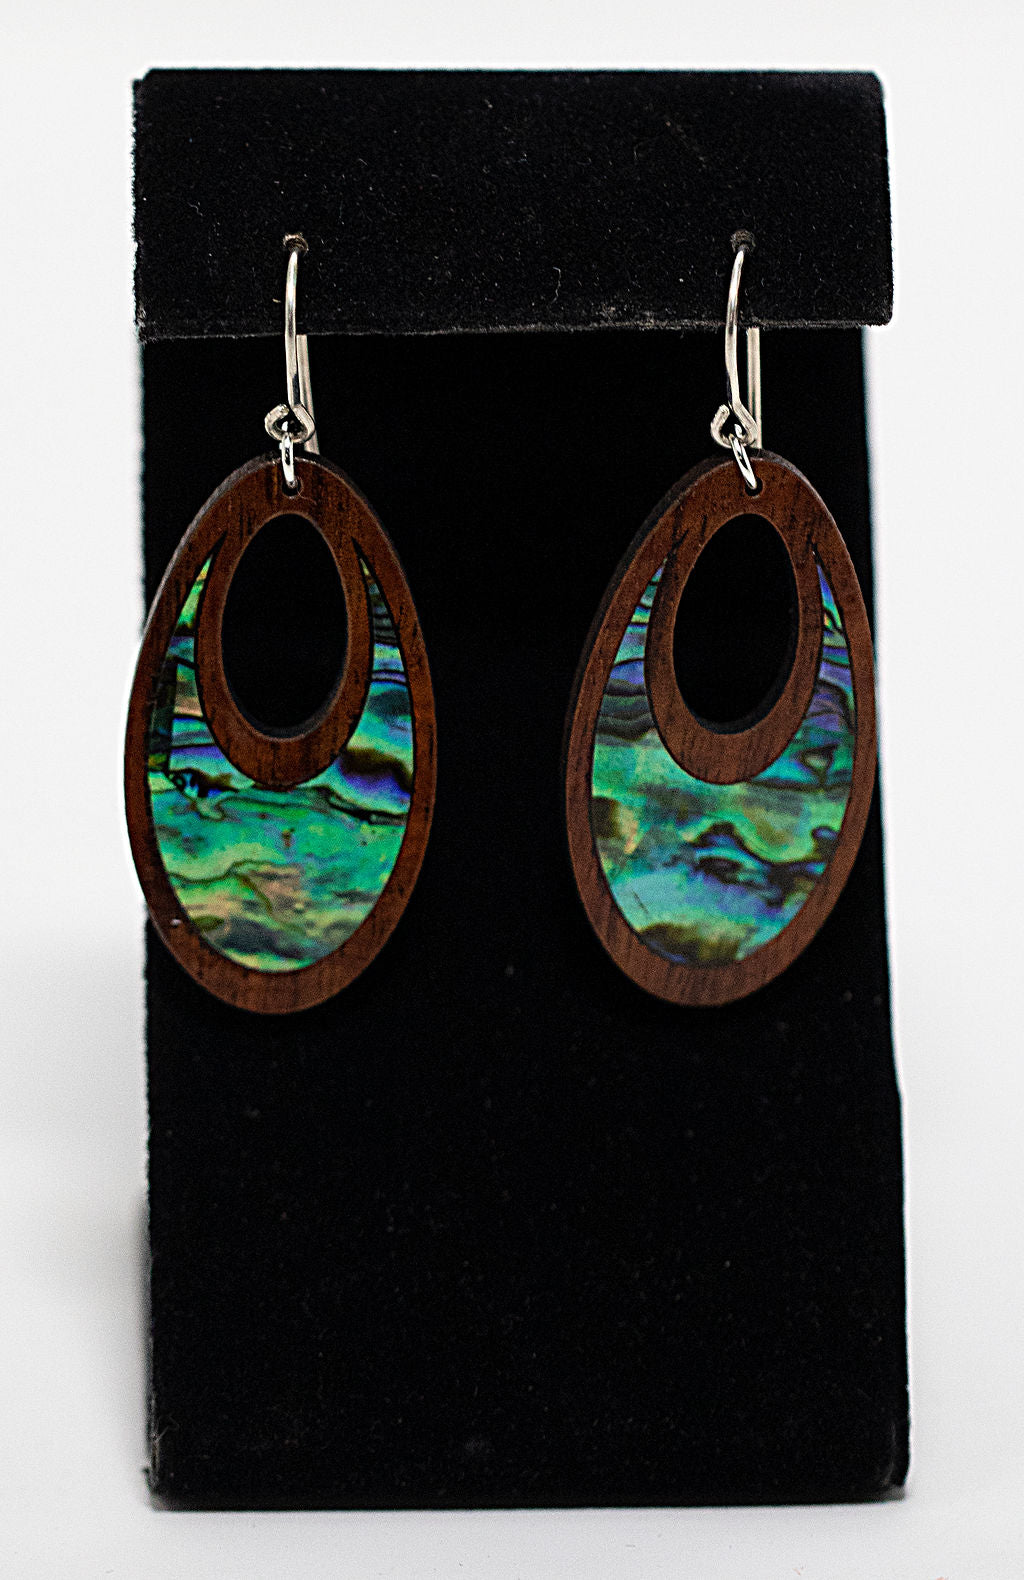 Handmade in Maui Hawaiian koa wood and abalone shell earrings